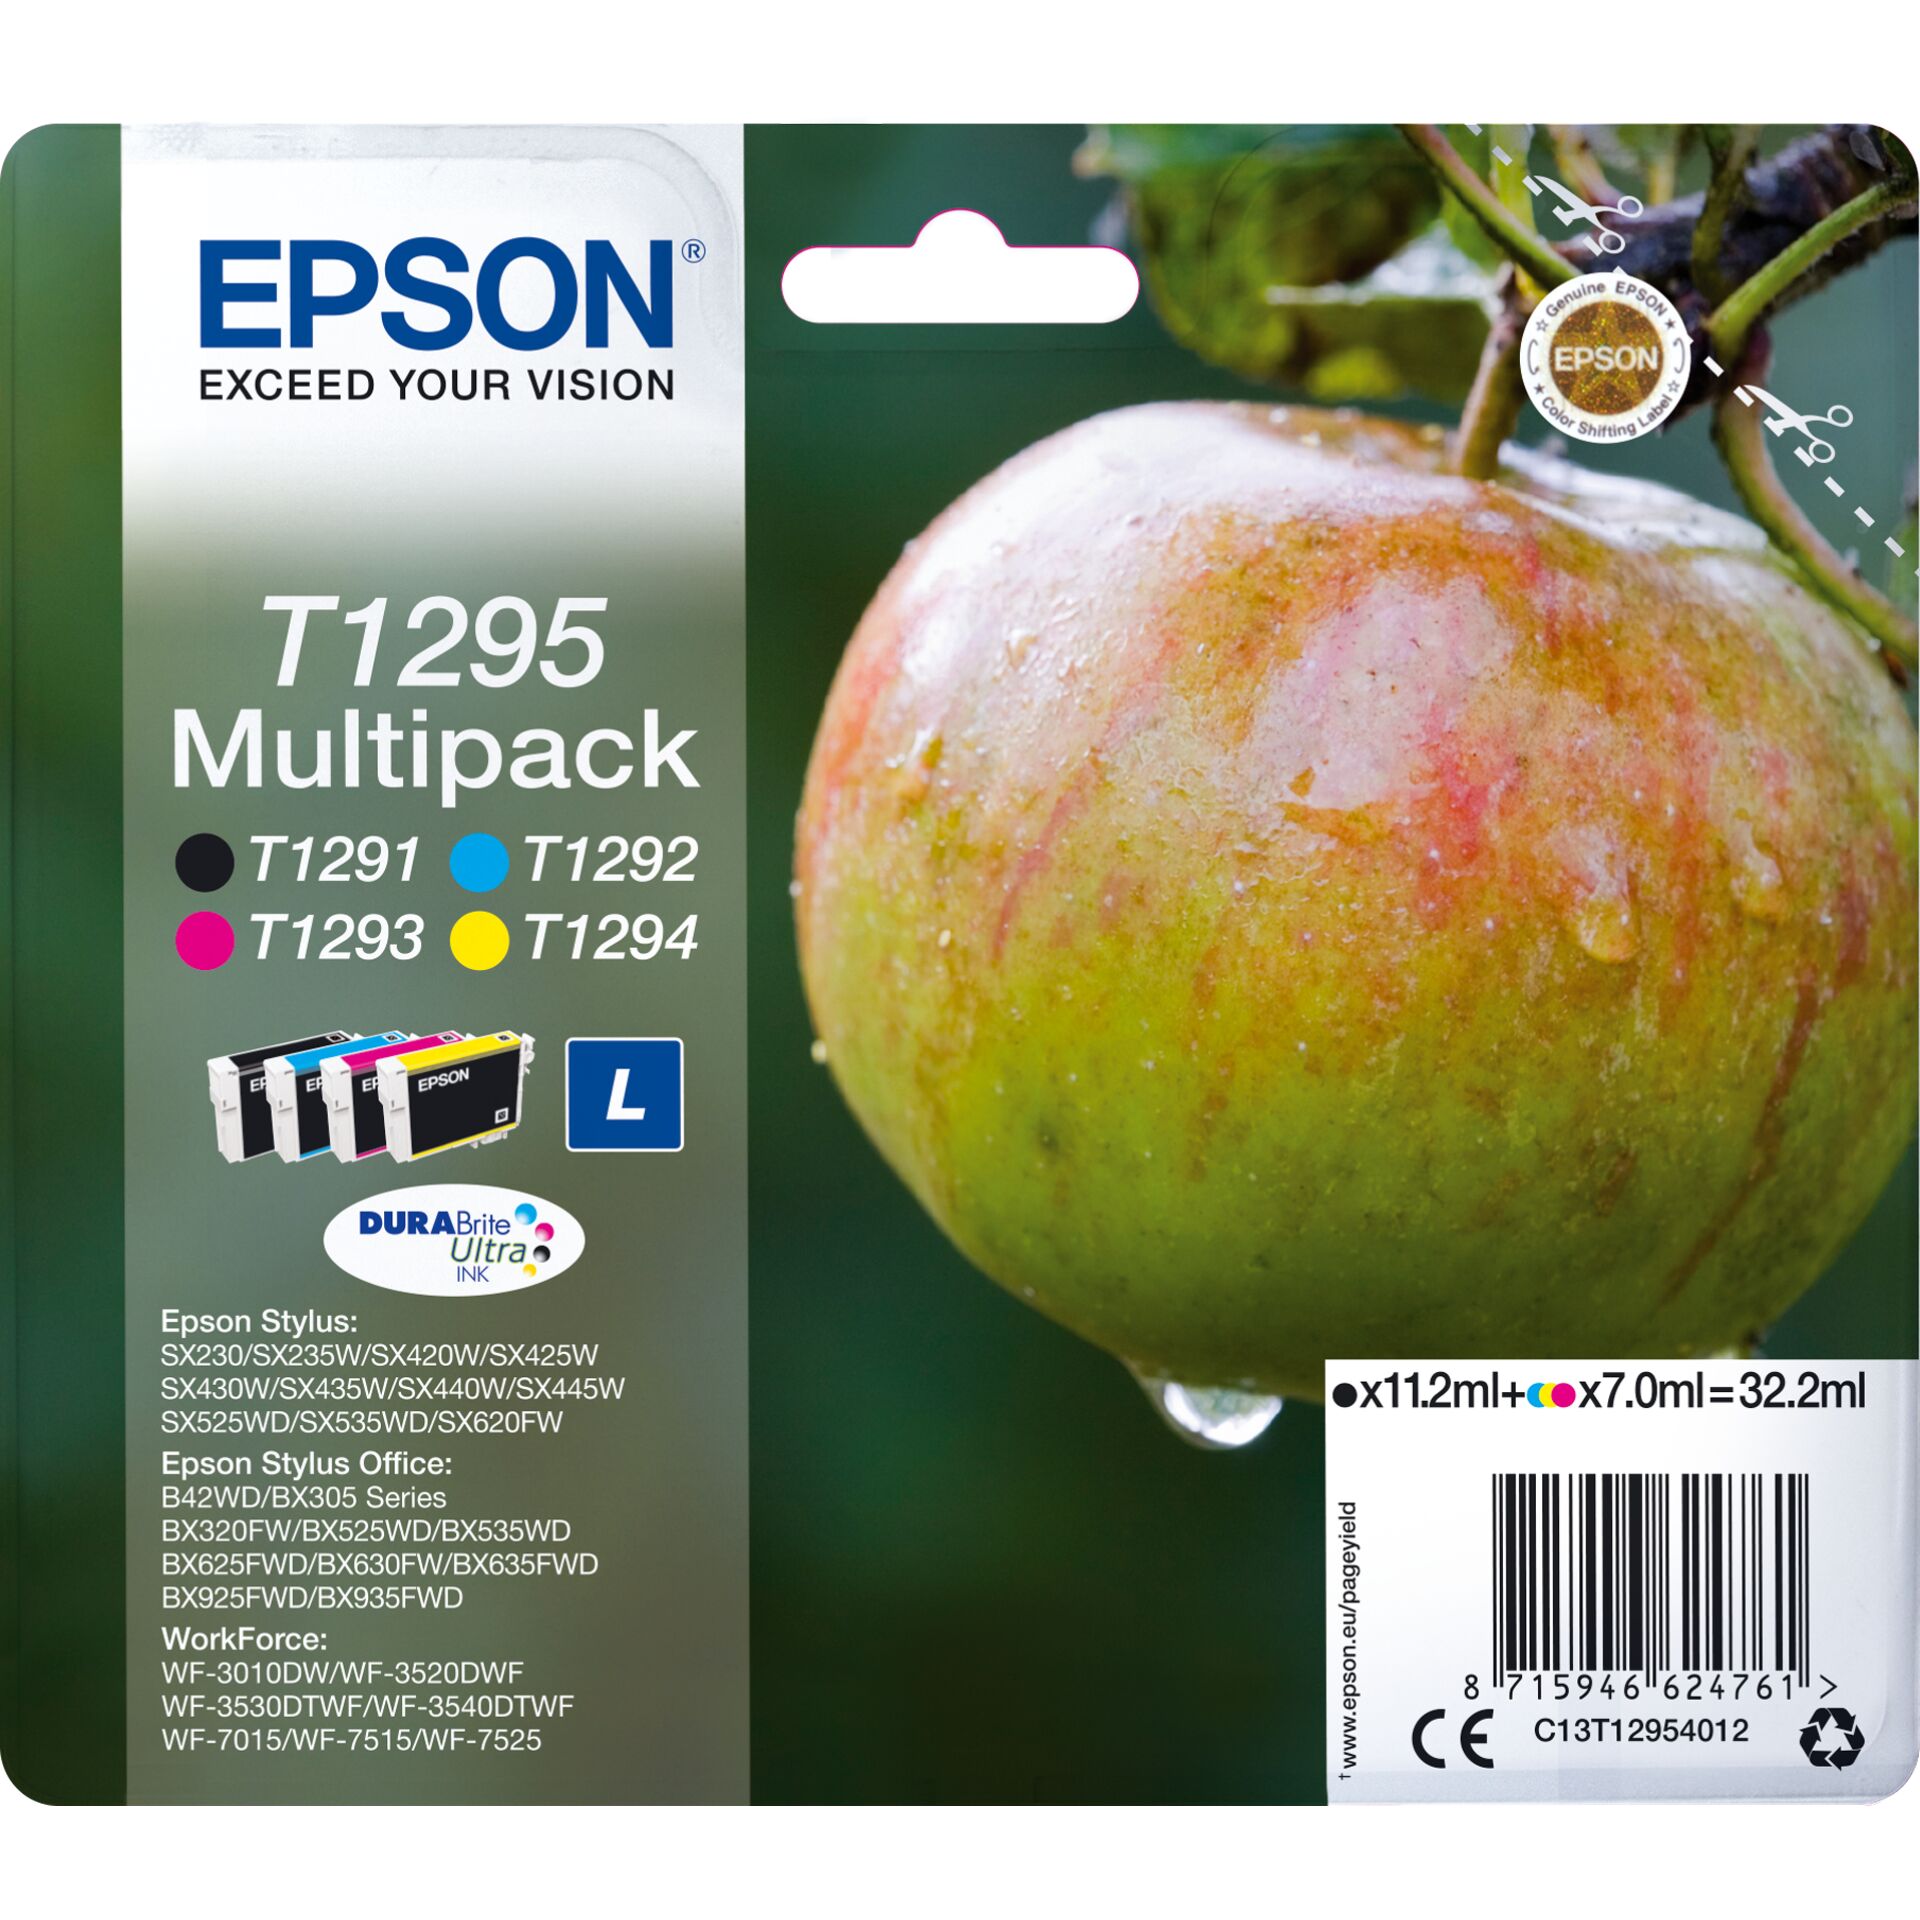 Epson DURABrite Ultra Multipack T 129 T 1295